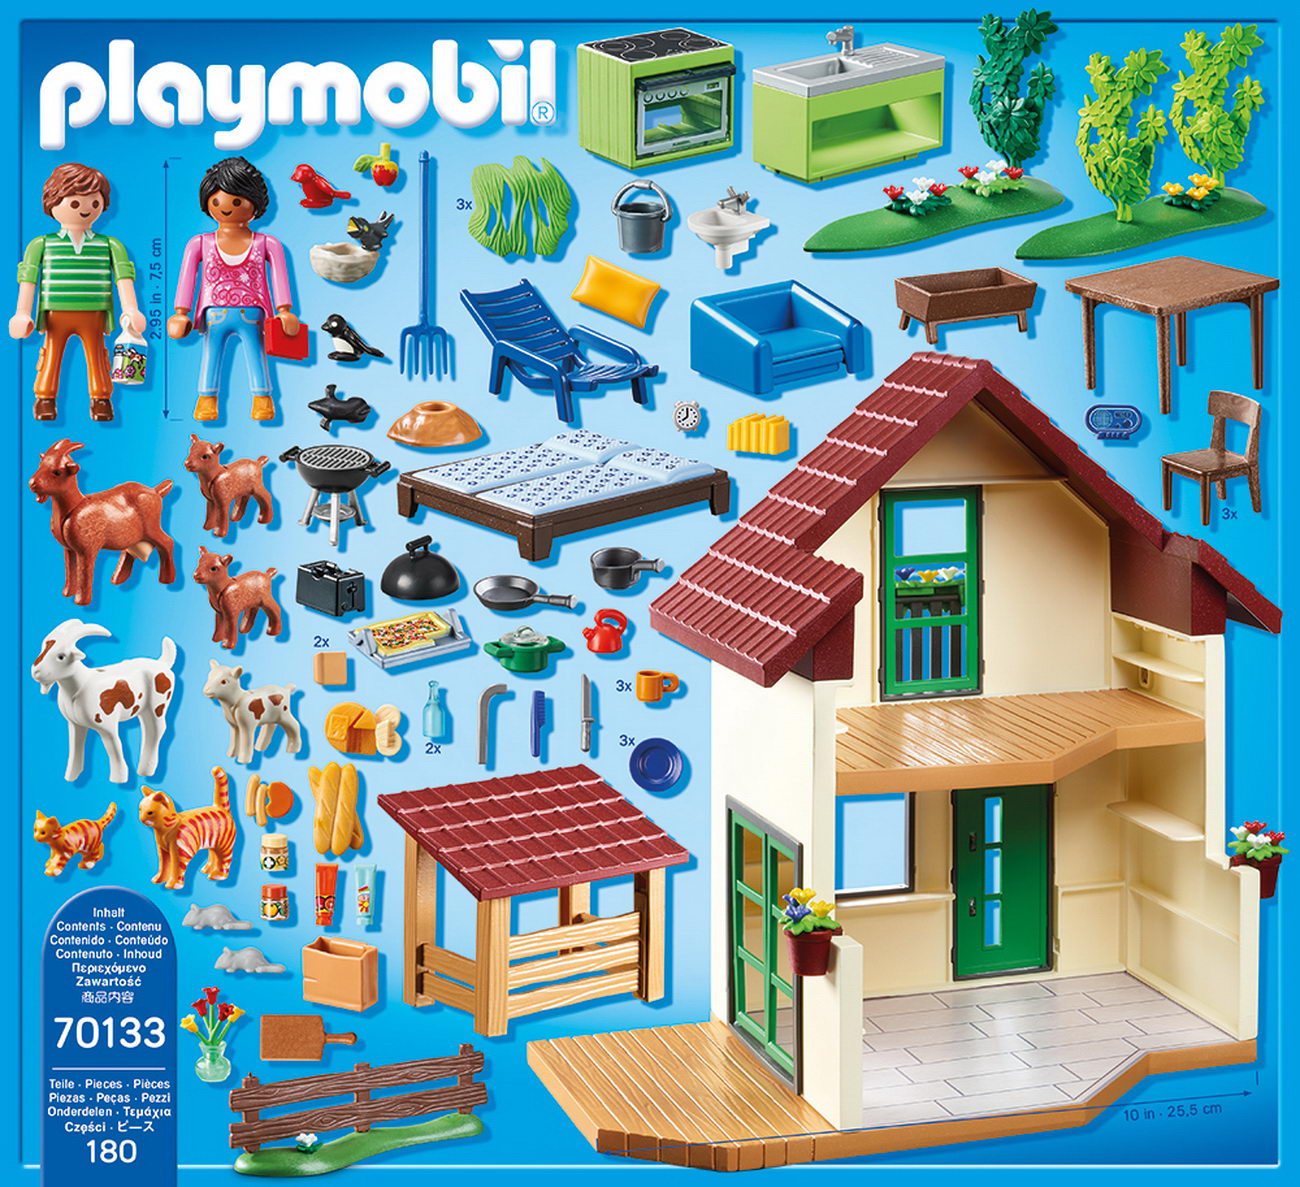 Playmobil 70133 - Bauernhaus (Country)